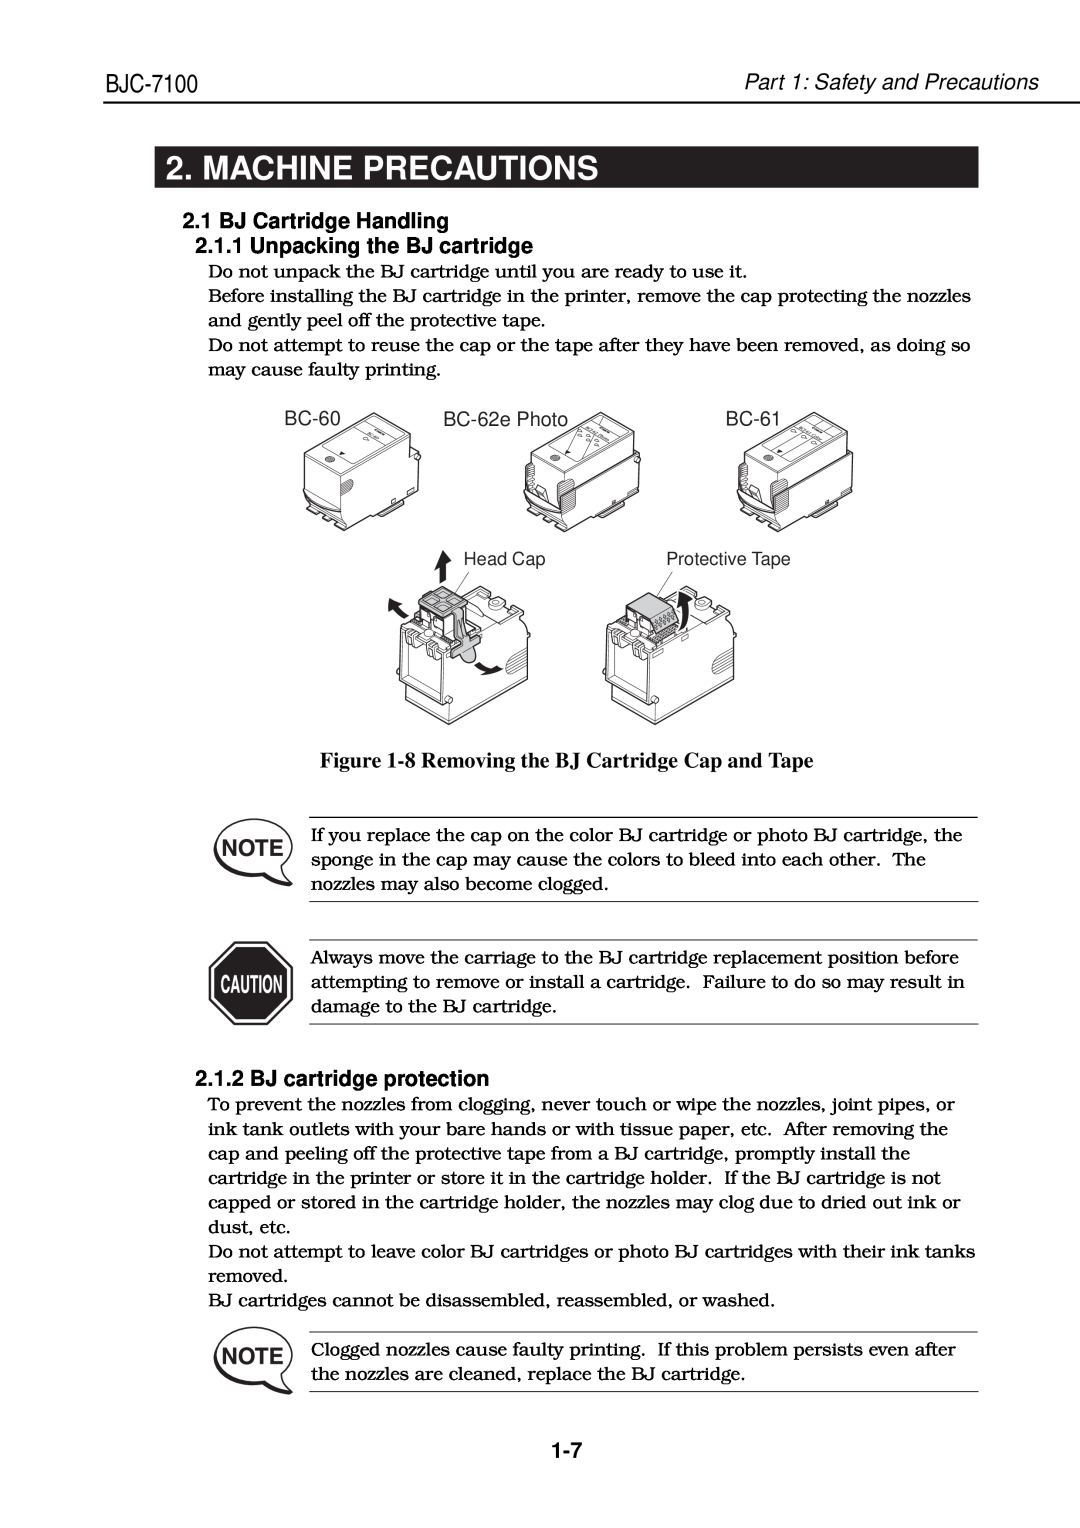 Canon QY8-1360-000 Machine Precautions, BJ Cartridge Handling 2.1.1 Unpacking the BJ cartridge, BJ cartridge protection 